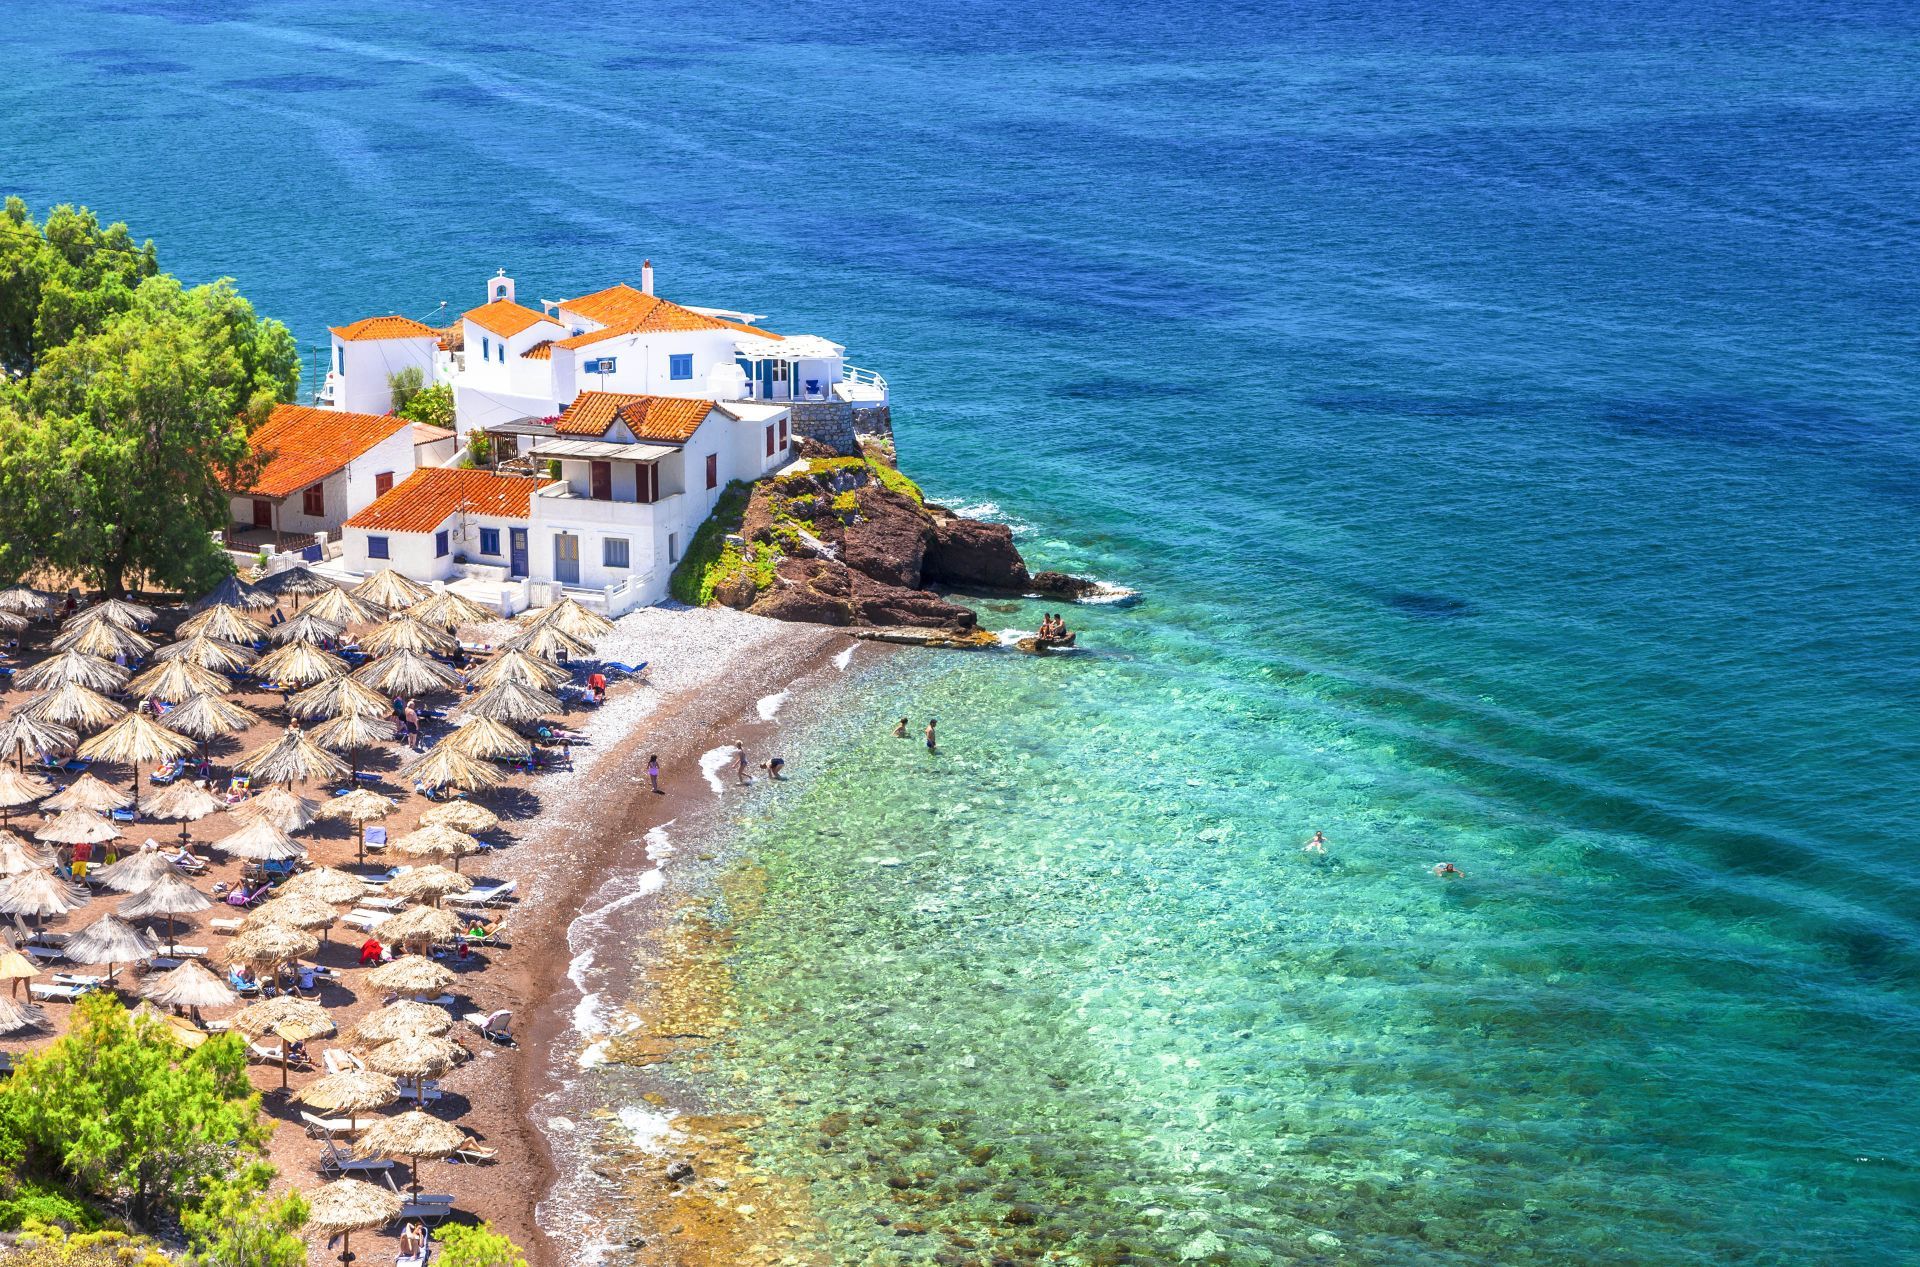 Hydra island: Vlichos, the closest beach to town